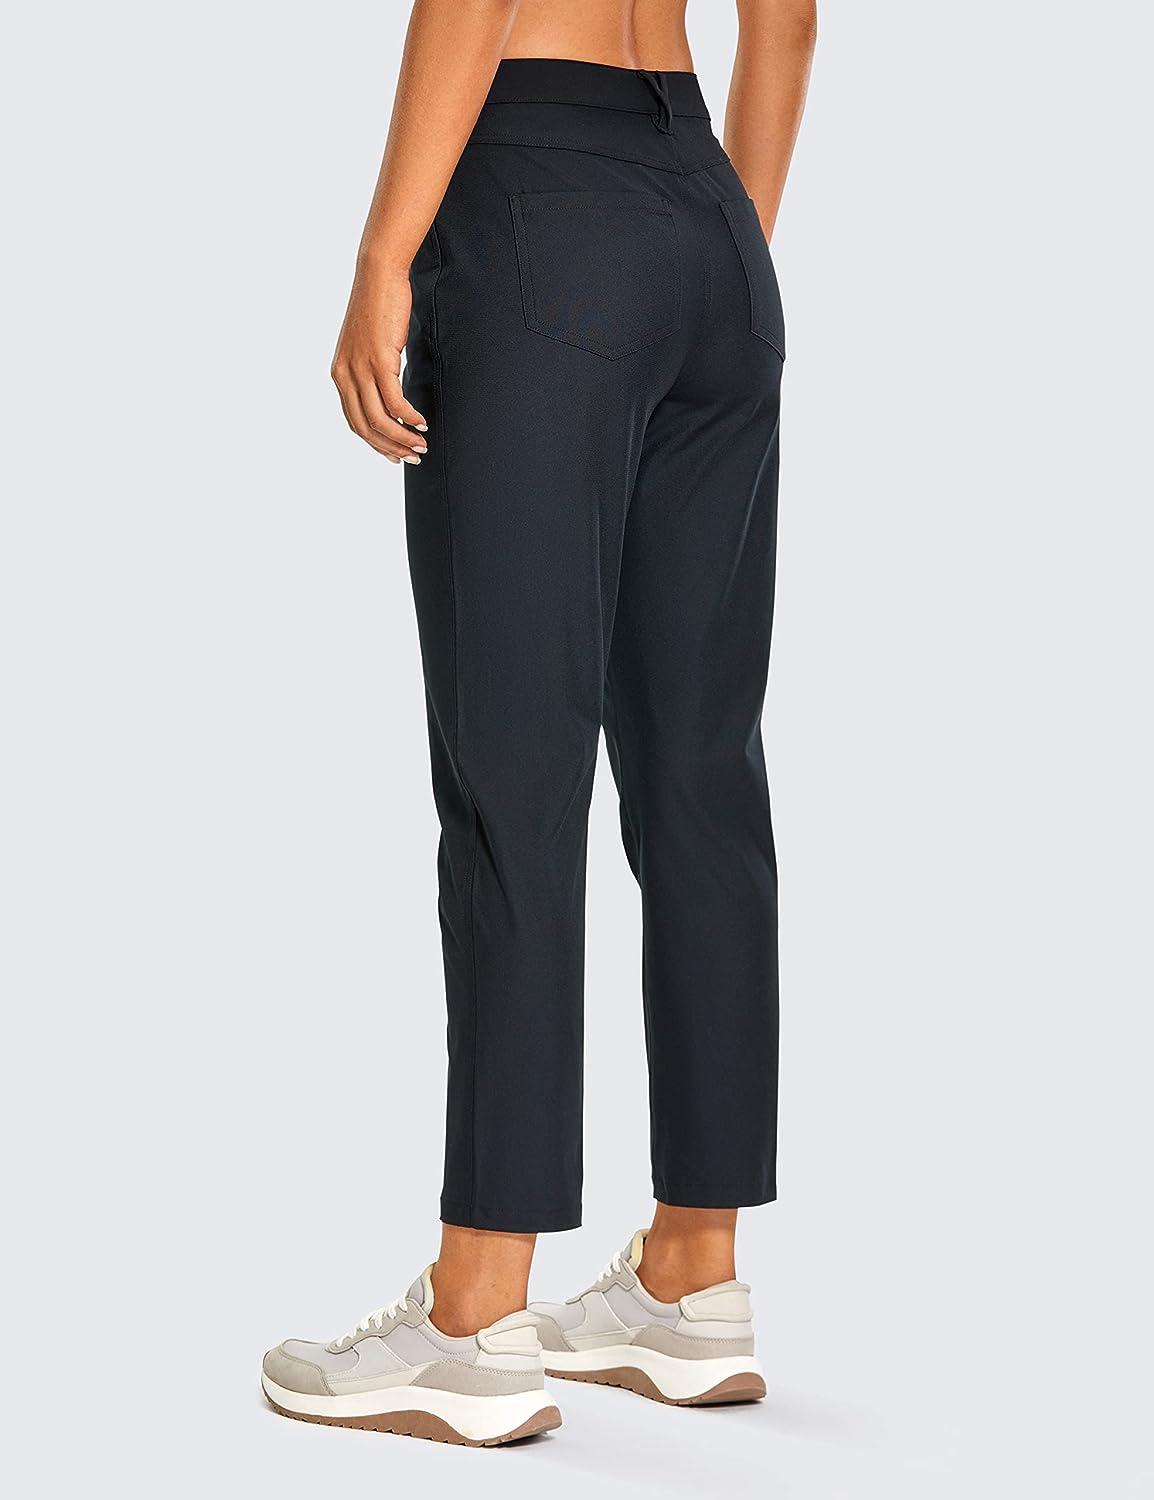 CRZ YOGA Women's High Rise Golf Pants Quick Dry Stretch Casual Straight Leg  Dress Work Pants